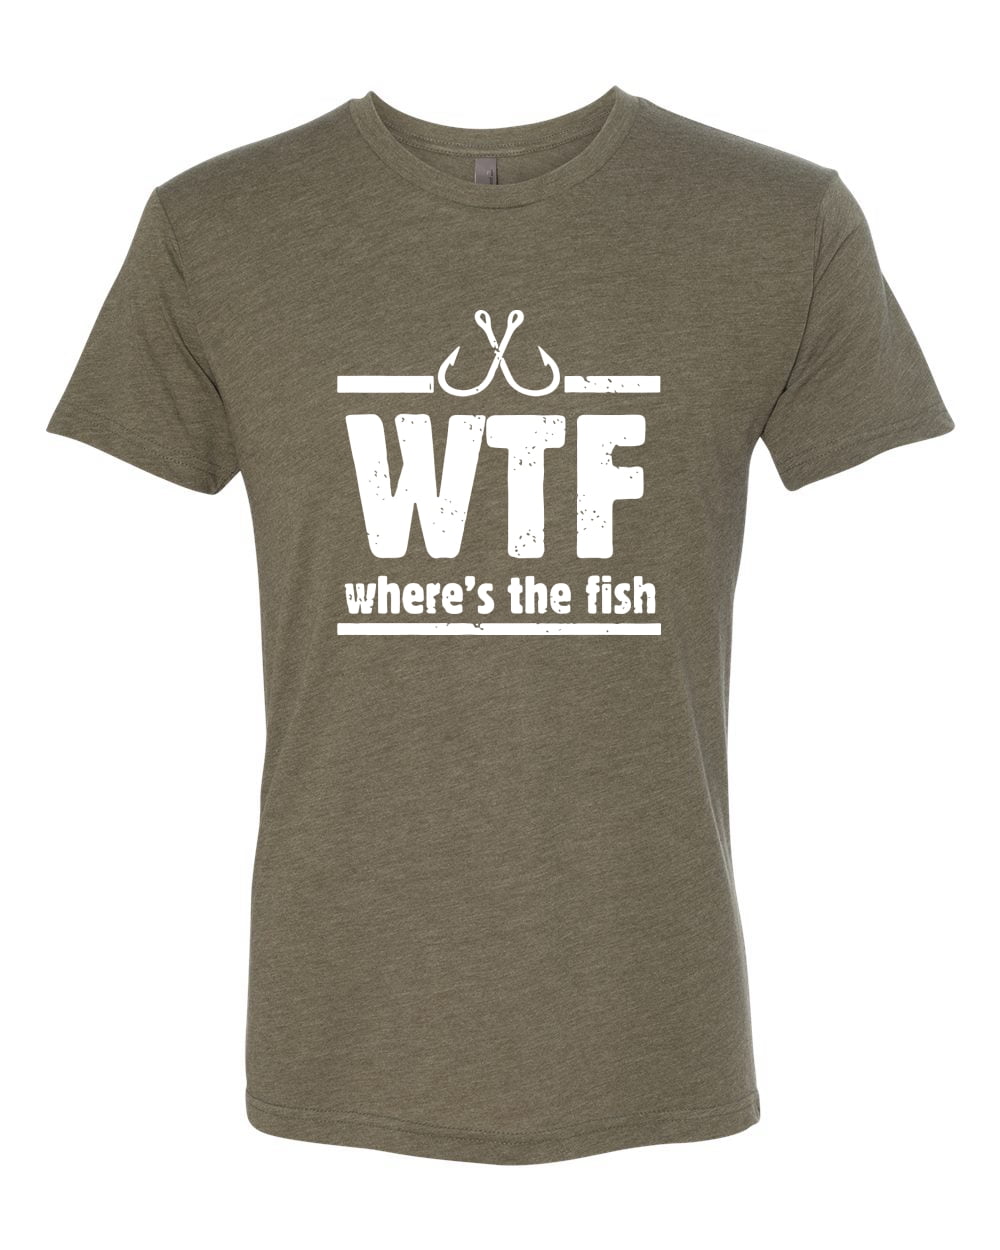 Where's the Fish WTF Parody  Mens Fishing Premium Tri Blend T-Shirt,  Vintage Royal, X-Large 